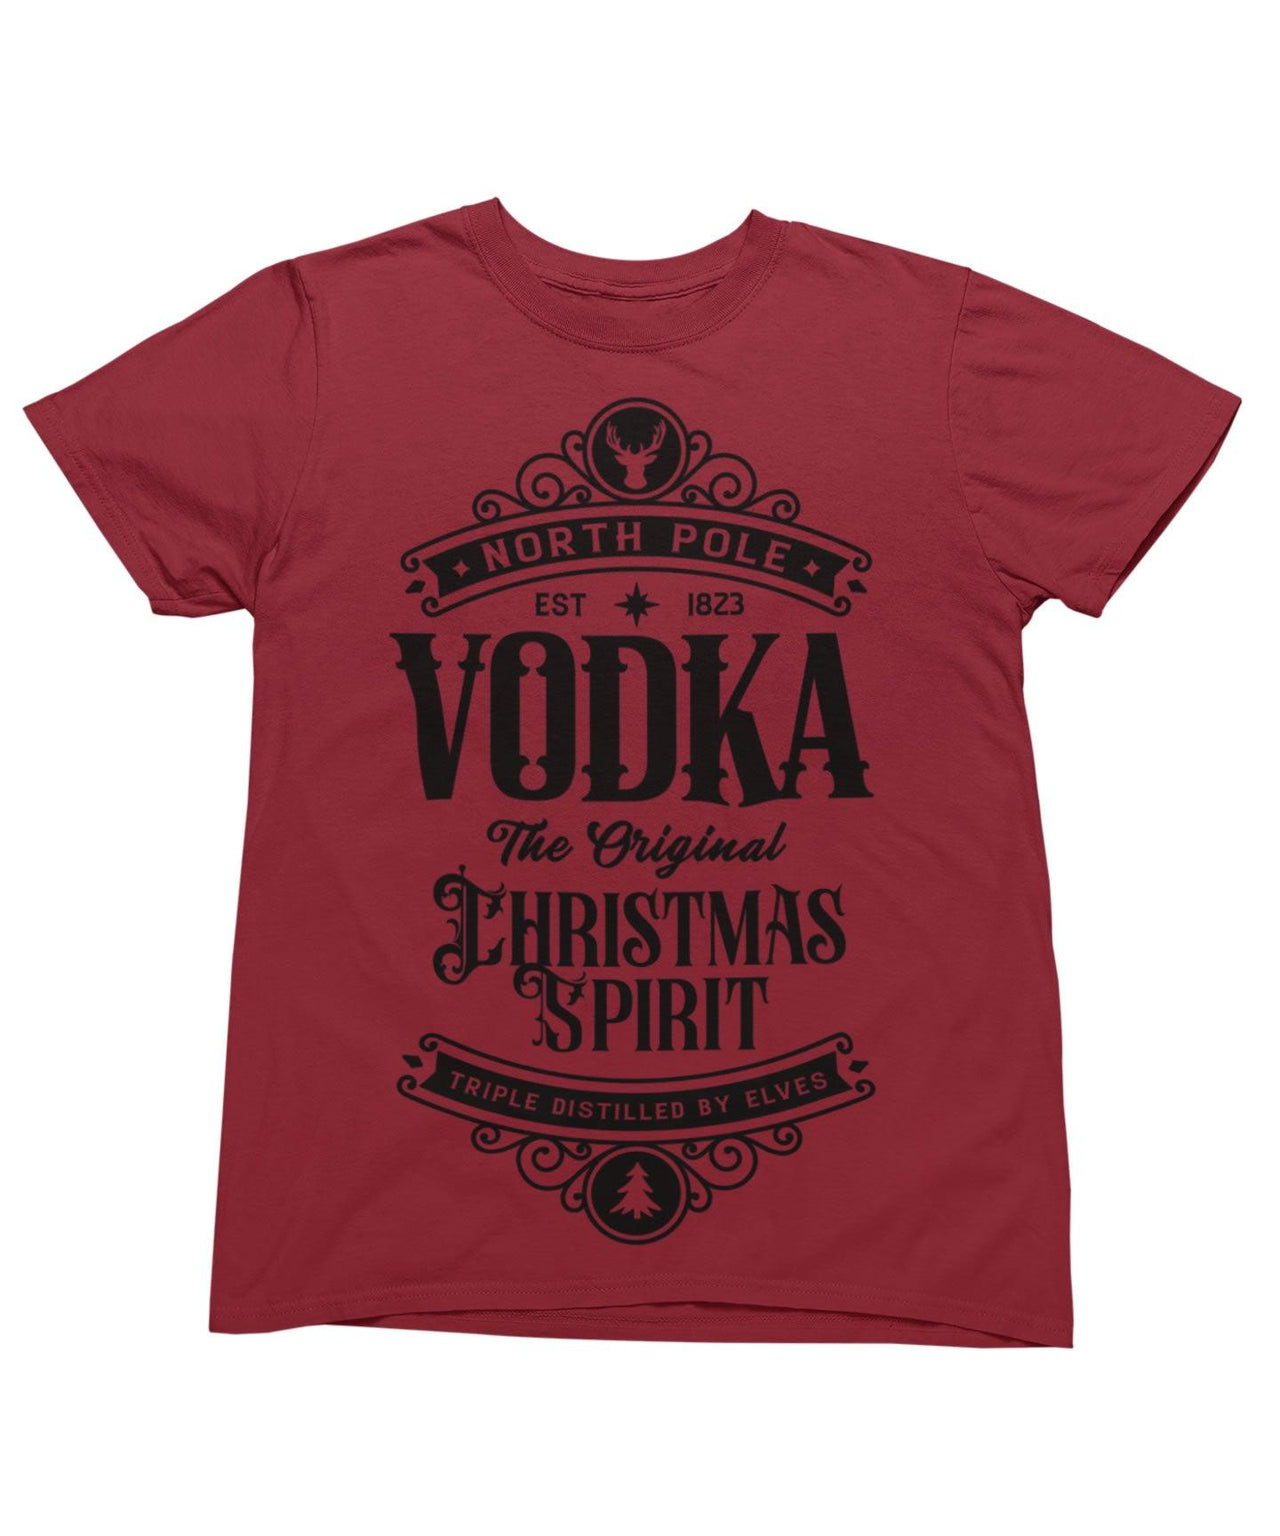 North Pole Vodka Mono Christmas Unisex Unisex T-Shirt 8Ball